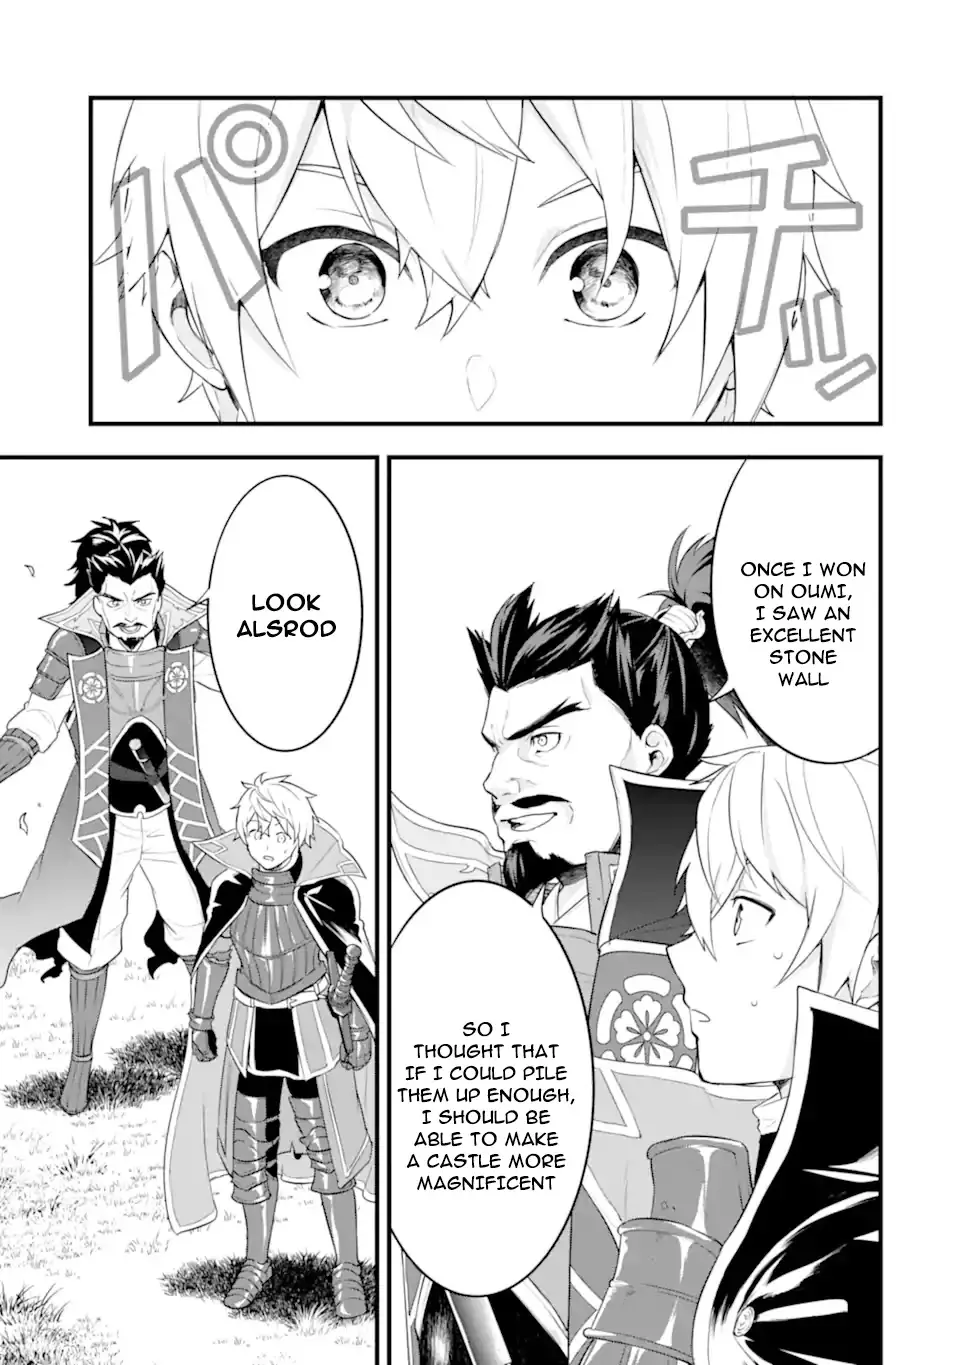 Mysterious Job Called Oda Nobunaga - 35 page 29-b5a93df1